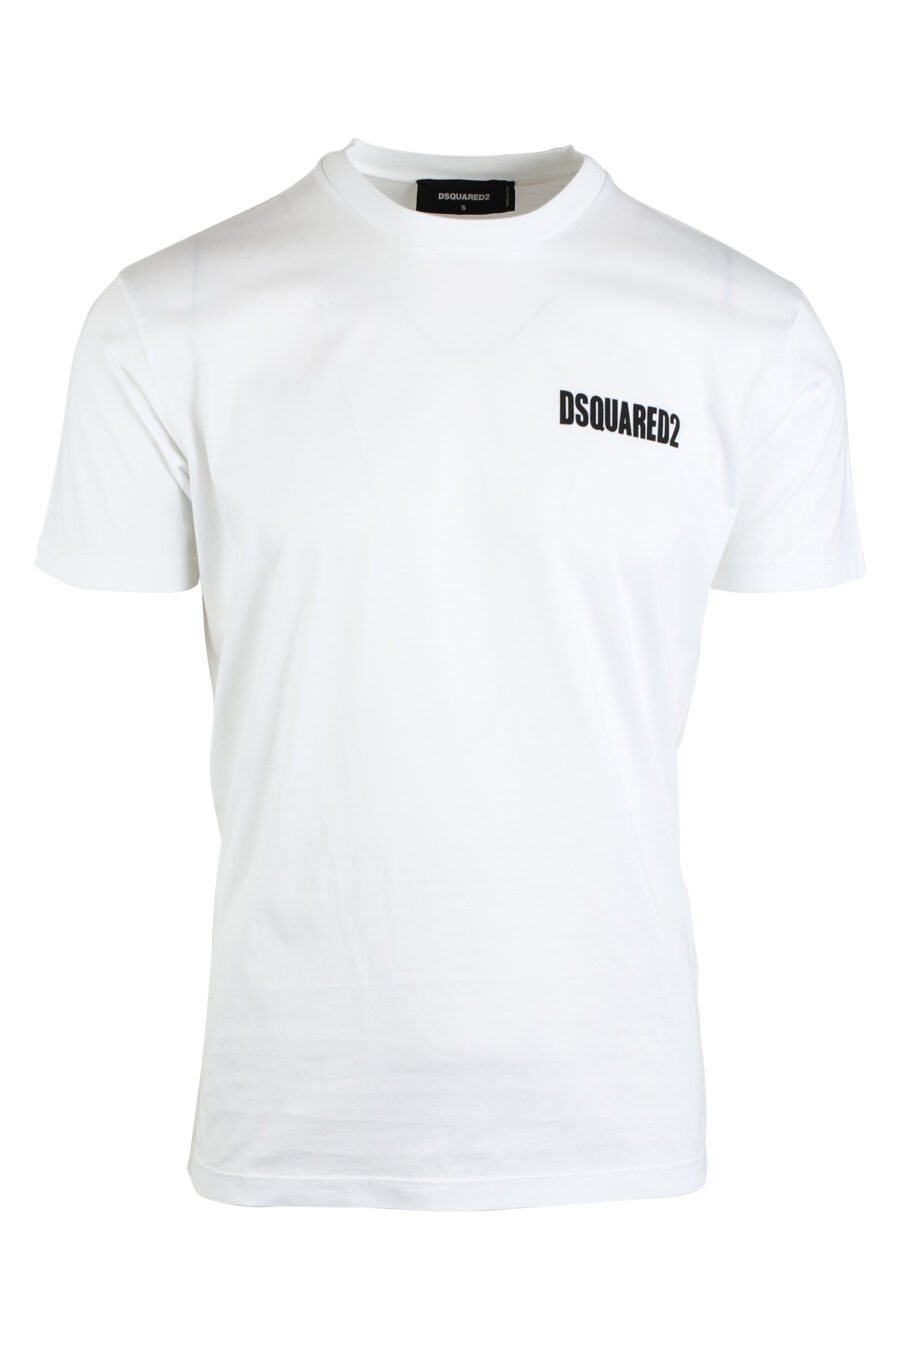 Camiseta blanca con minilogo negro - IMG 0673